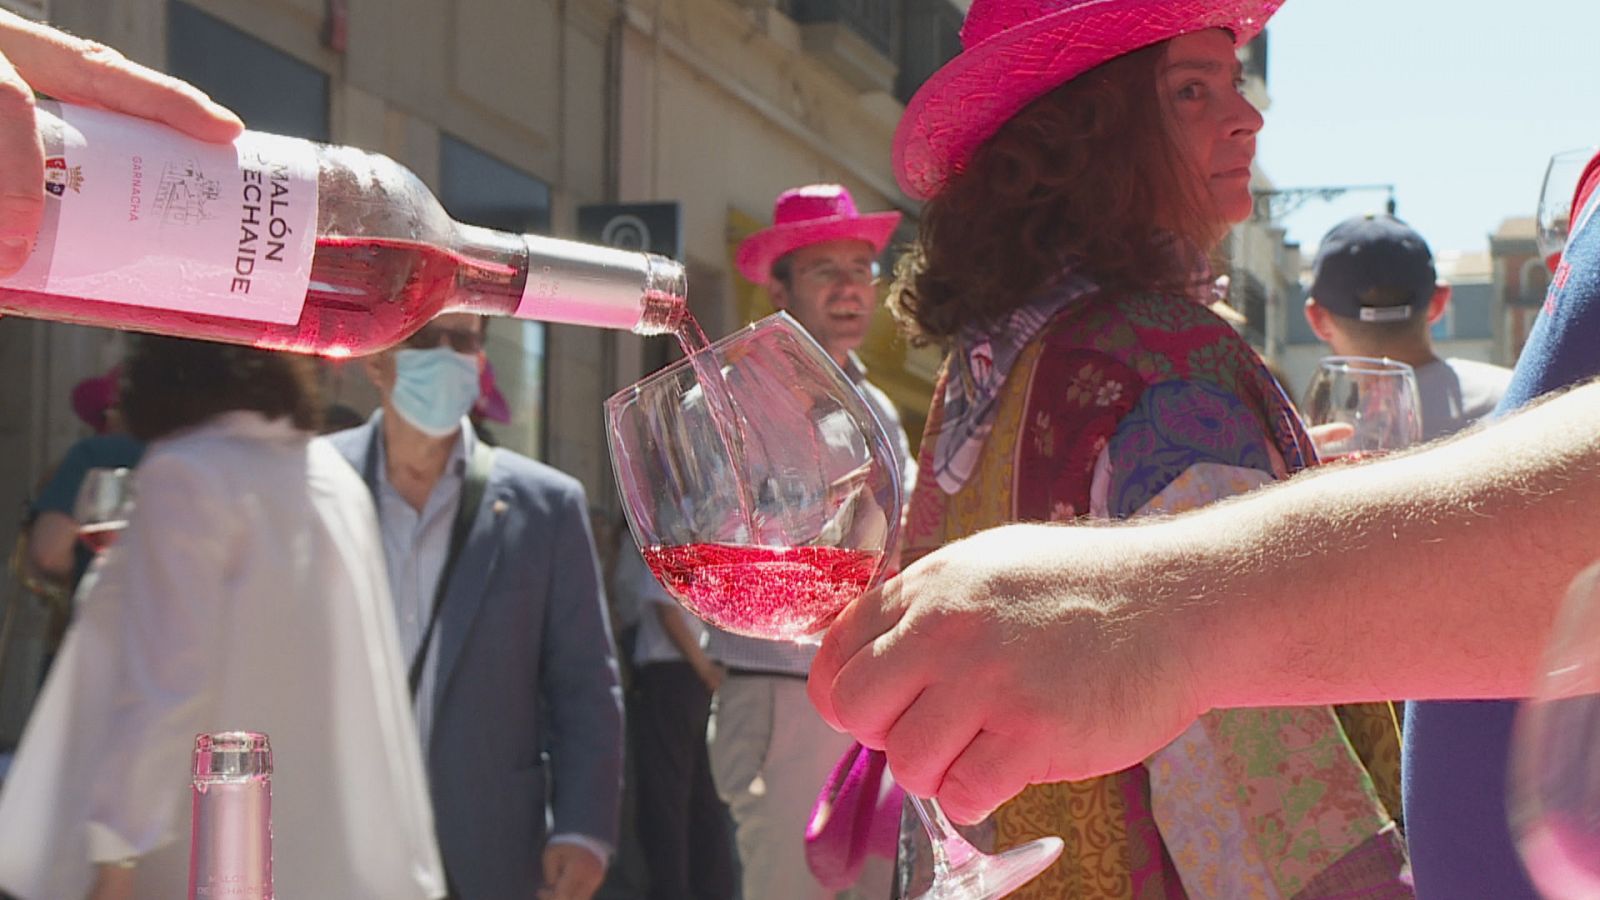 El vino rosado toma Pamplona